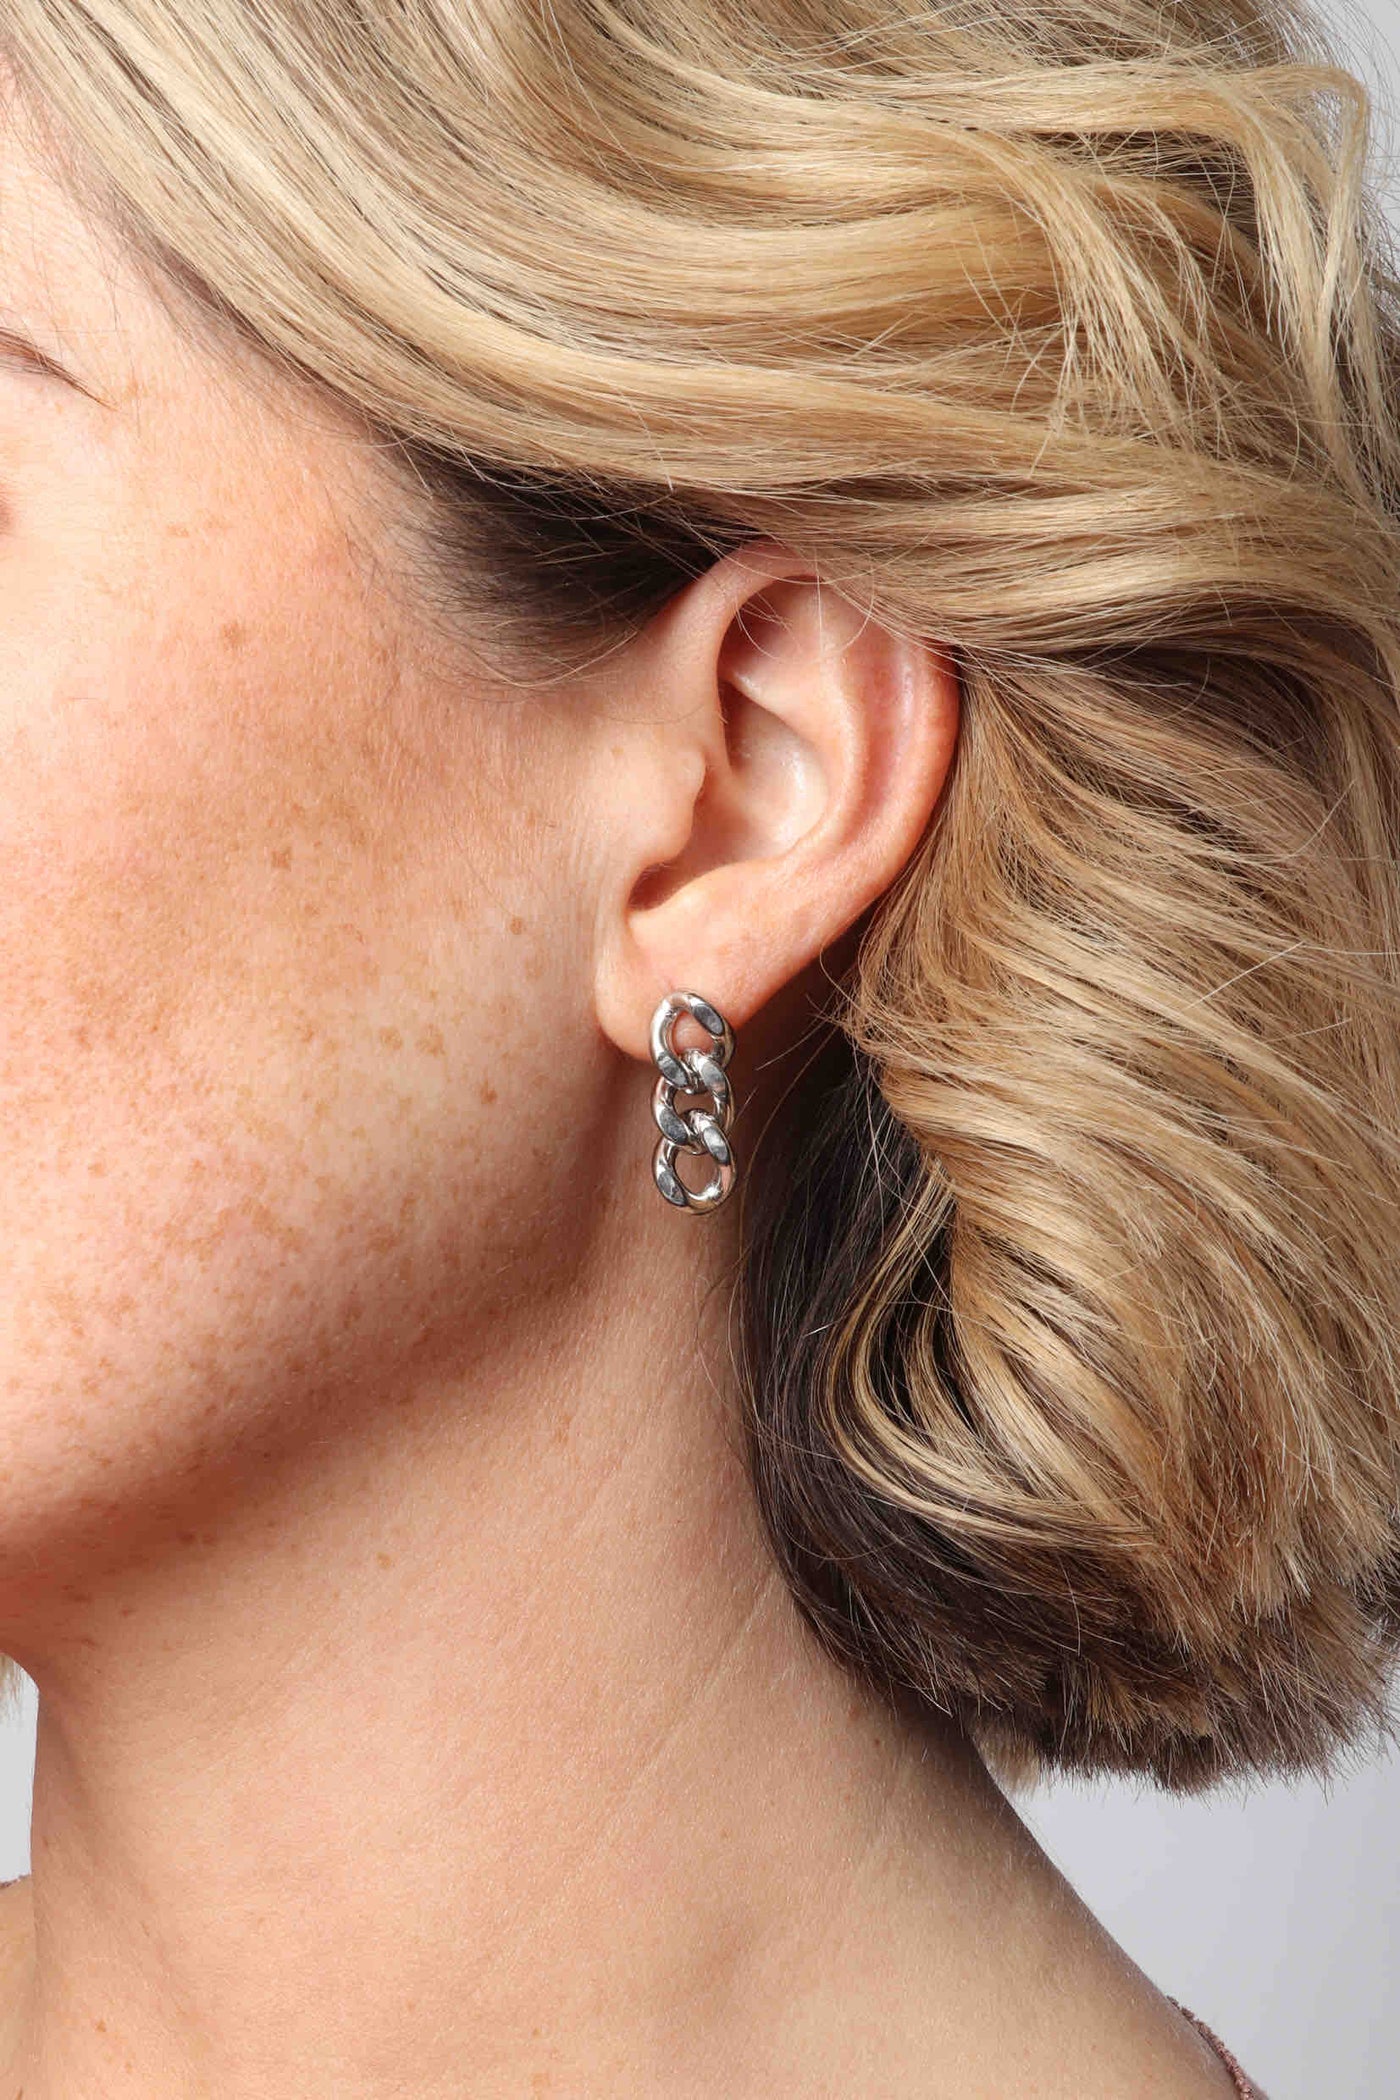 Marrin Costello wearing Marrin Costello Jewelry Queens Drops cuban link post back earrings — for pierced ears. Waterproof, sustainable, hypoallergenic. Polished stainless steel.